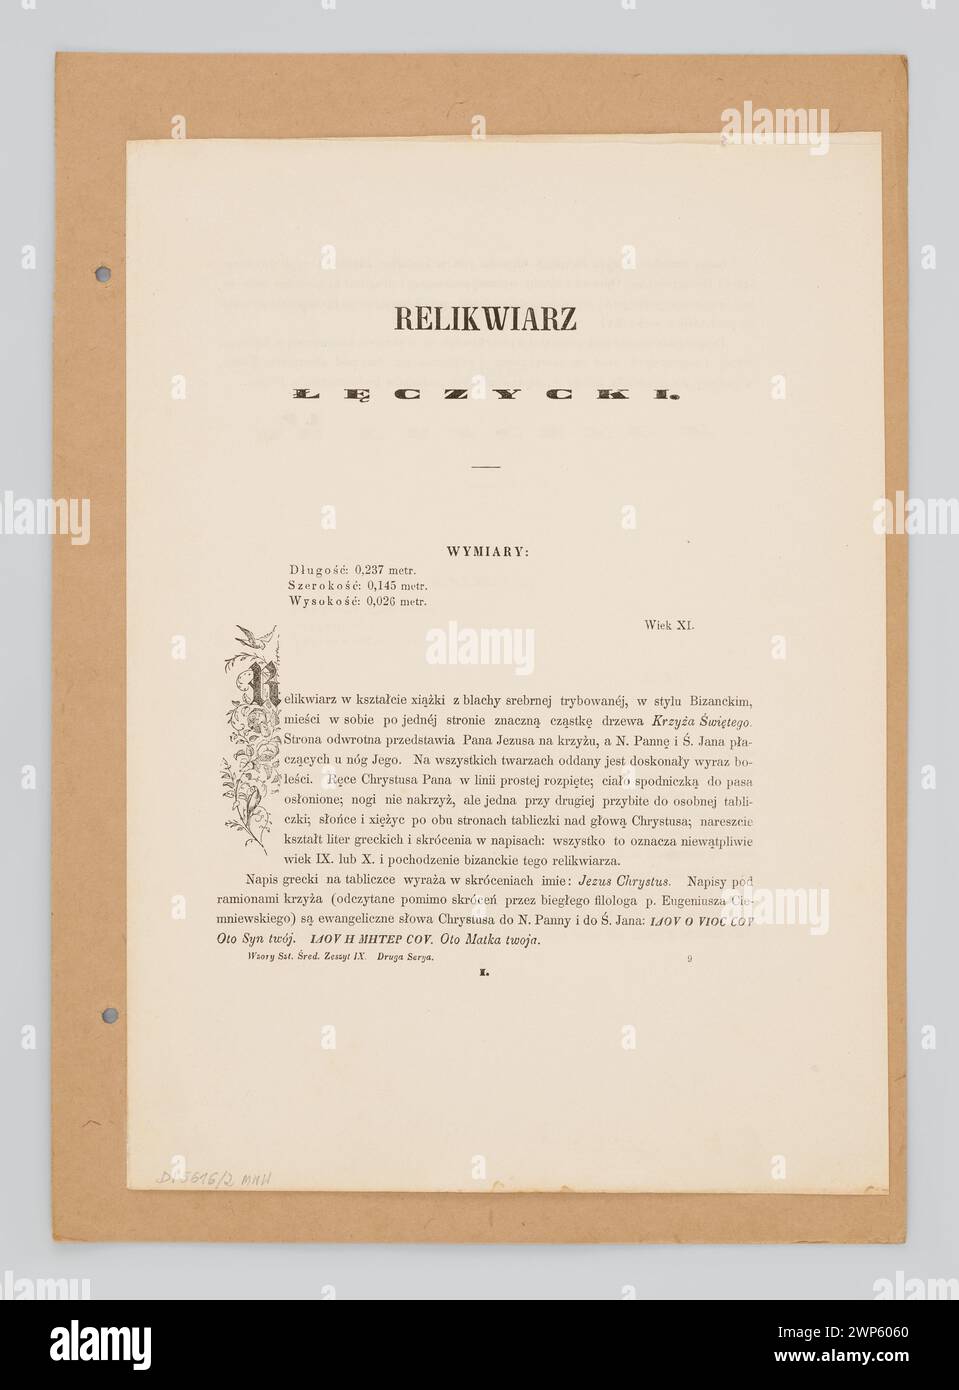 Reliquary J z: il. Z: Aleksander Przedziecki, Edward Rastawiecki, 'Designs of the Medaline Art and from the Rebirth Age after the end of the 17th century in former Poland' (Warsaw, 1855-1858), Series 2, z. IX; Fajans, Maksymilian (1825-1890), Przedziecki, Aleksander (1814-1871), Rastawiecki, Edward (1804-1874), Unger, Józef (Warsaw; Drukarnia, Publishing House, KSI Garnia; 1841-Ca 1877); 1855-1858 (1855-00-00-1858-00-00); Stock Photo